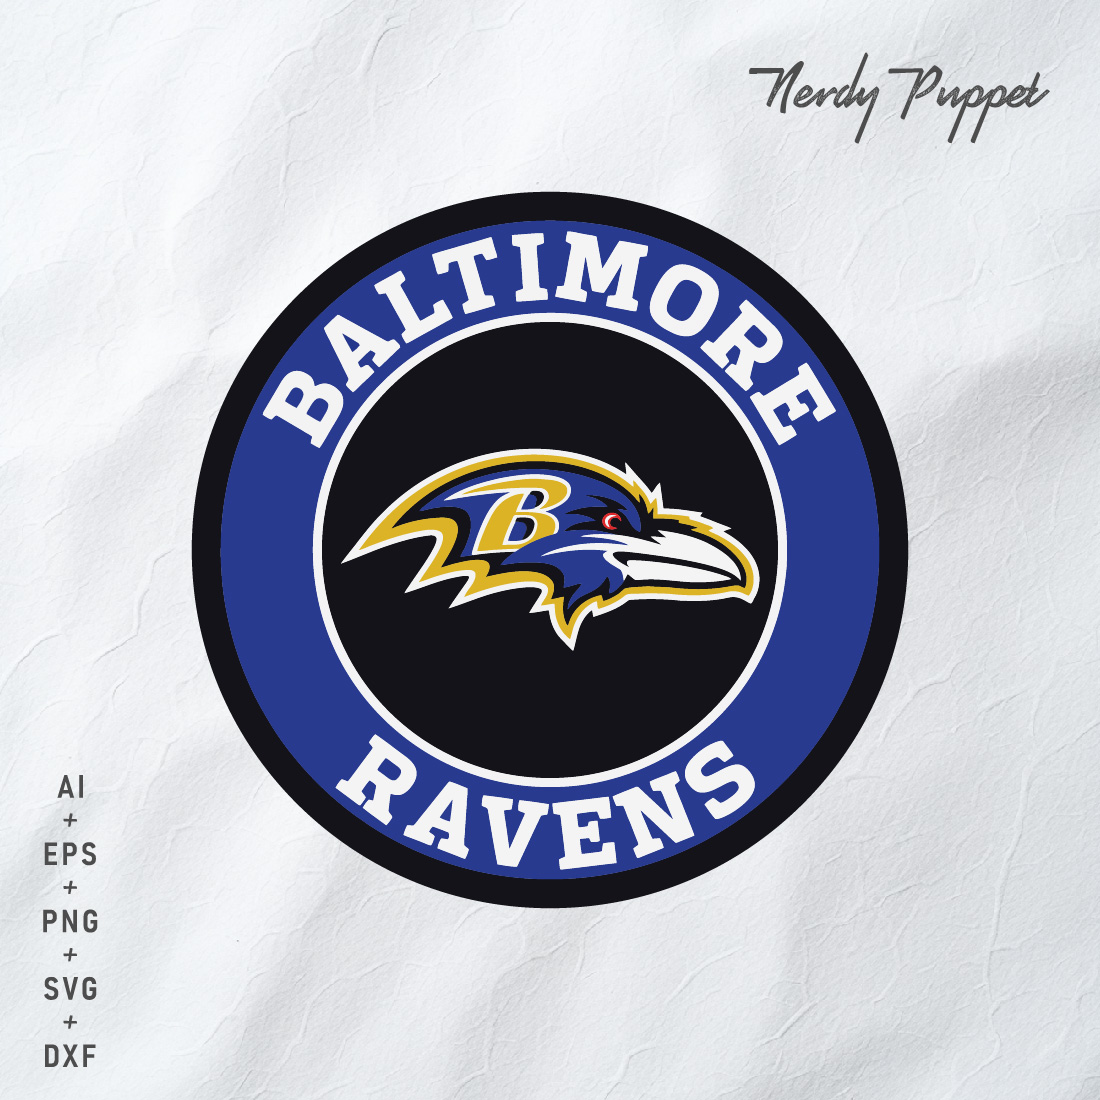 Baltimore Ravens 11 preview image.